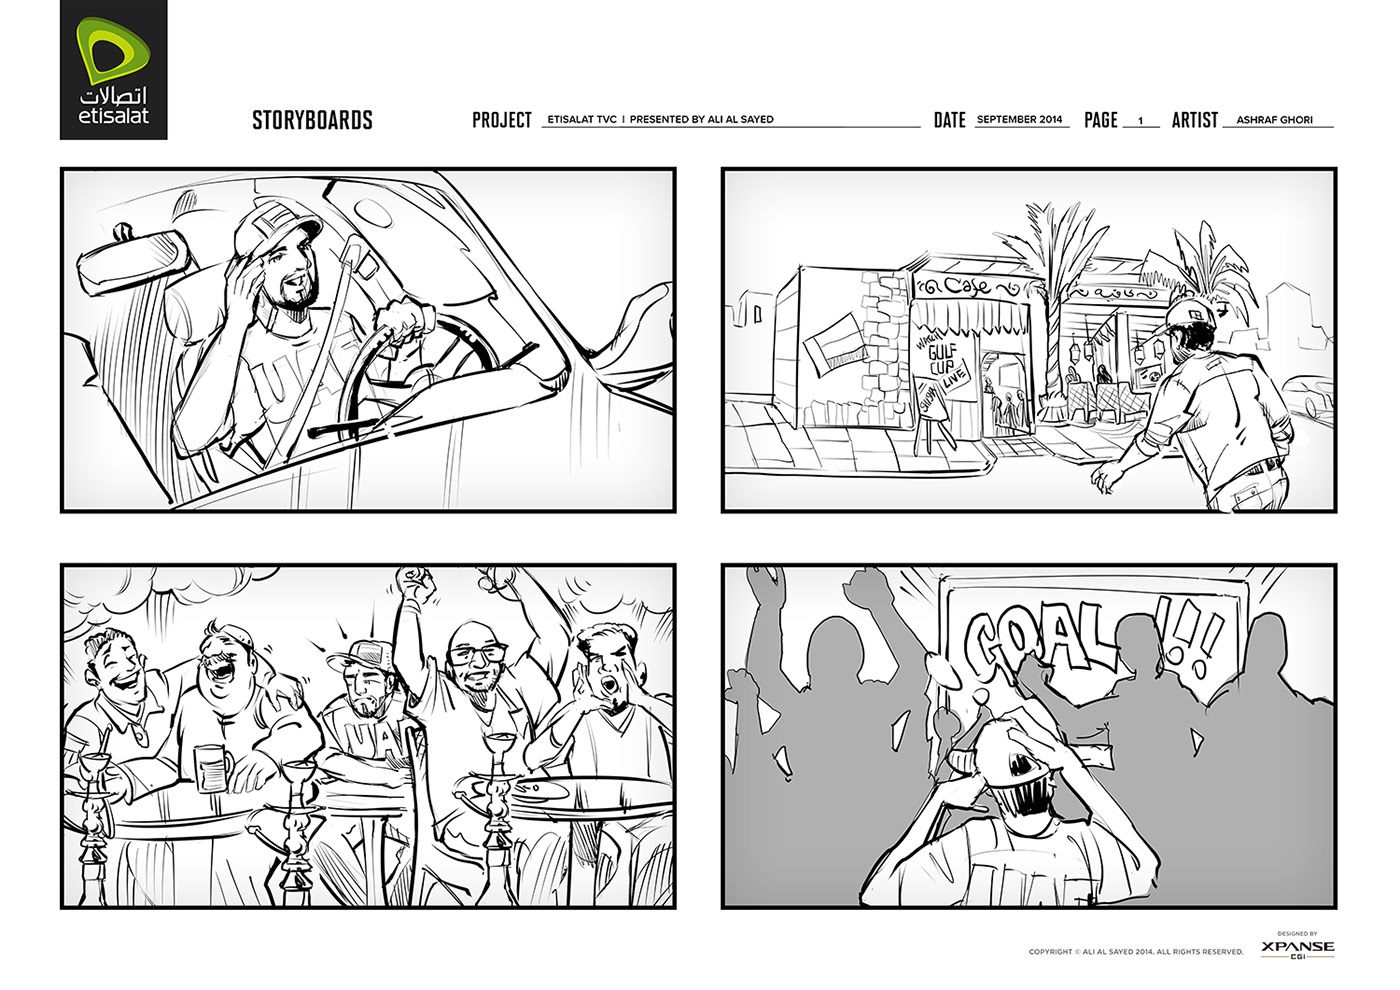 ali alsayed etisalat elife Storyboards funny TV Commercial series UAE dubai ILLUSTRATION 